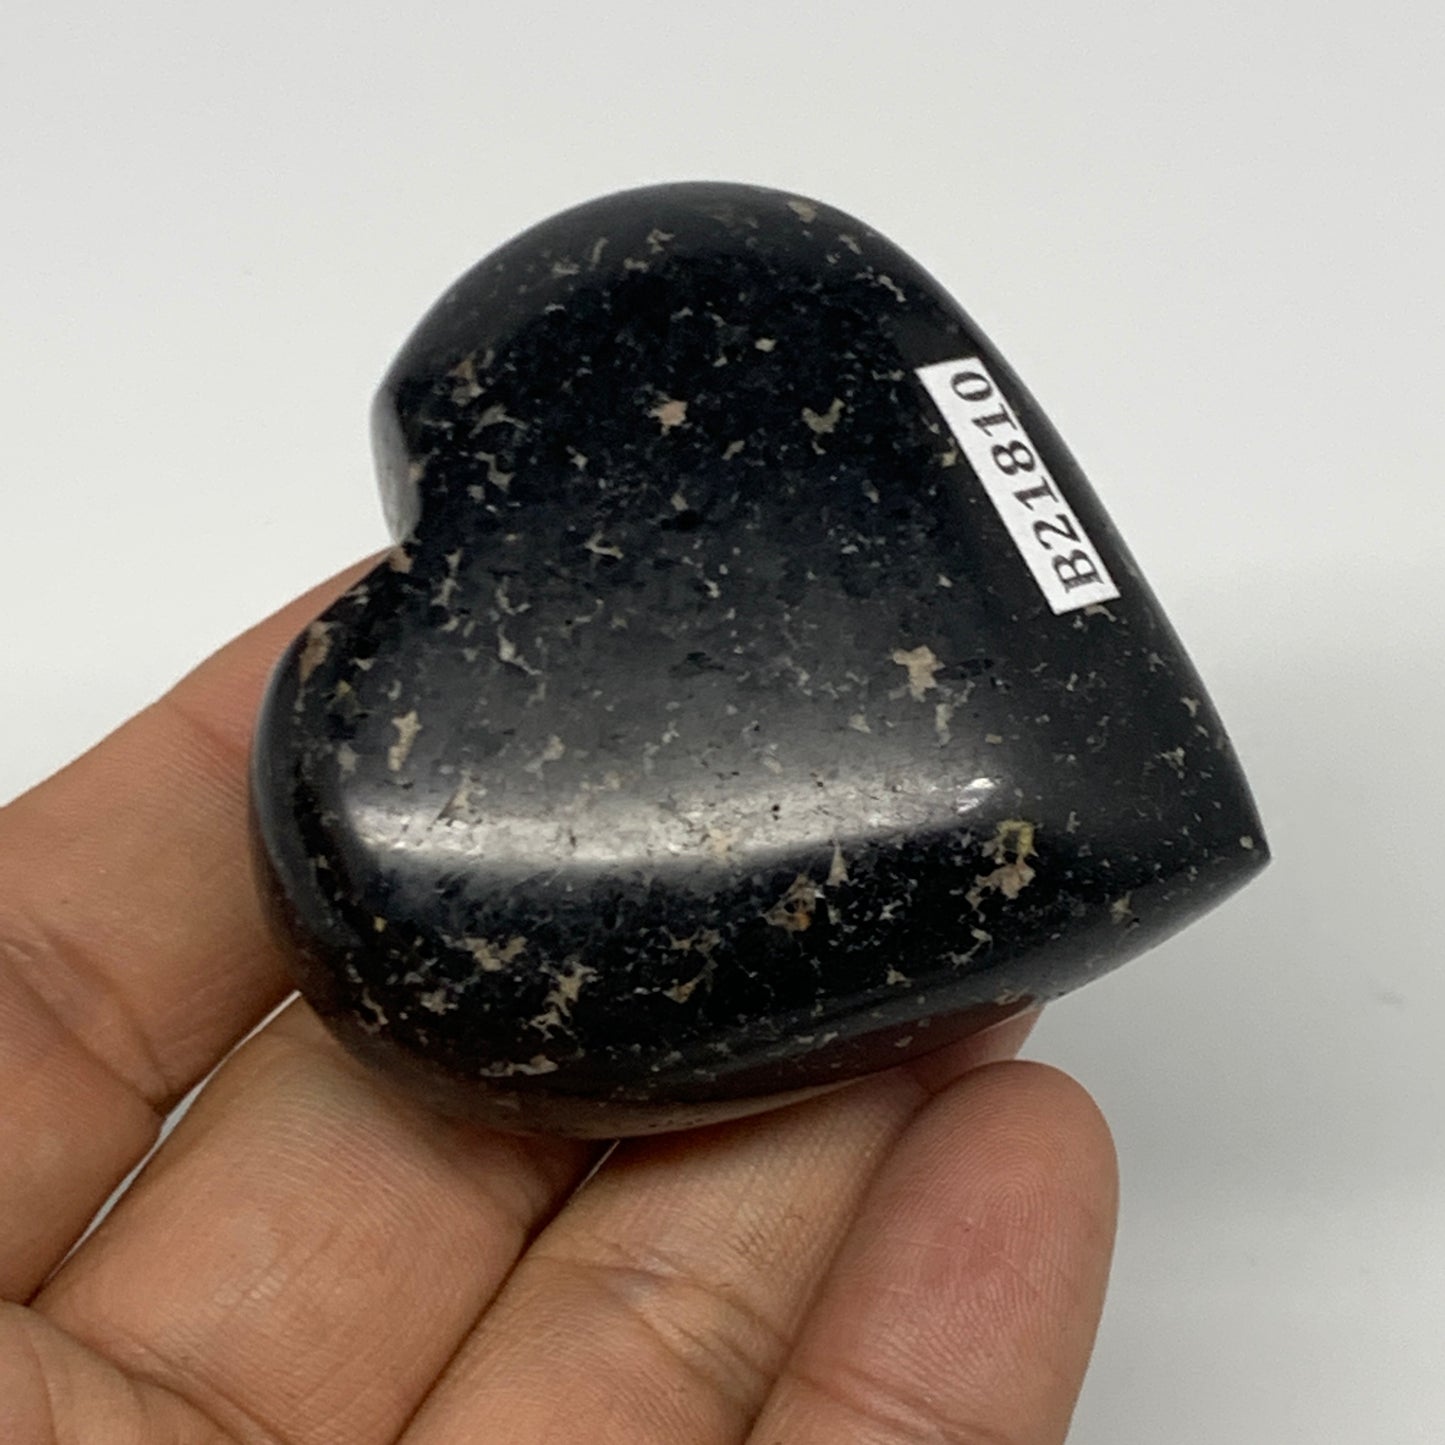 108.9g, 2.1"x2.1"x0.9", Black Tourmaline Heart Polished Crystal Decor, B21810